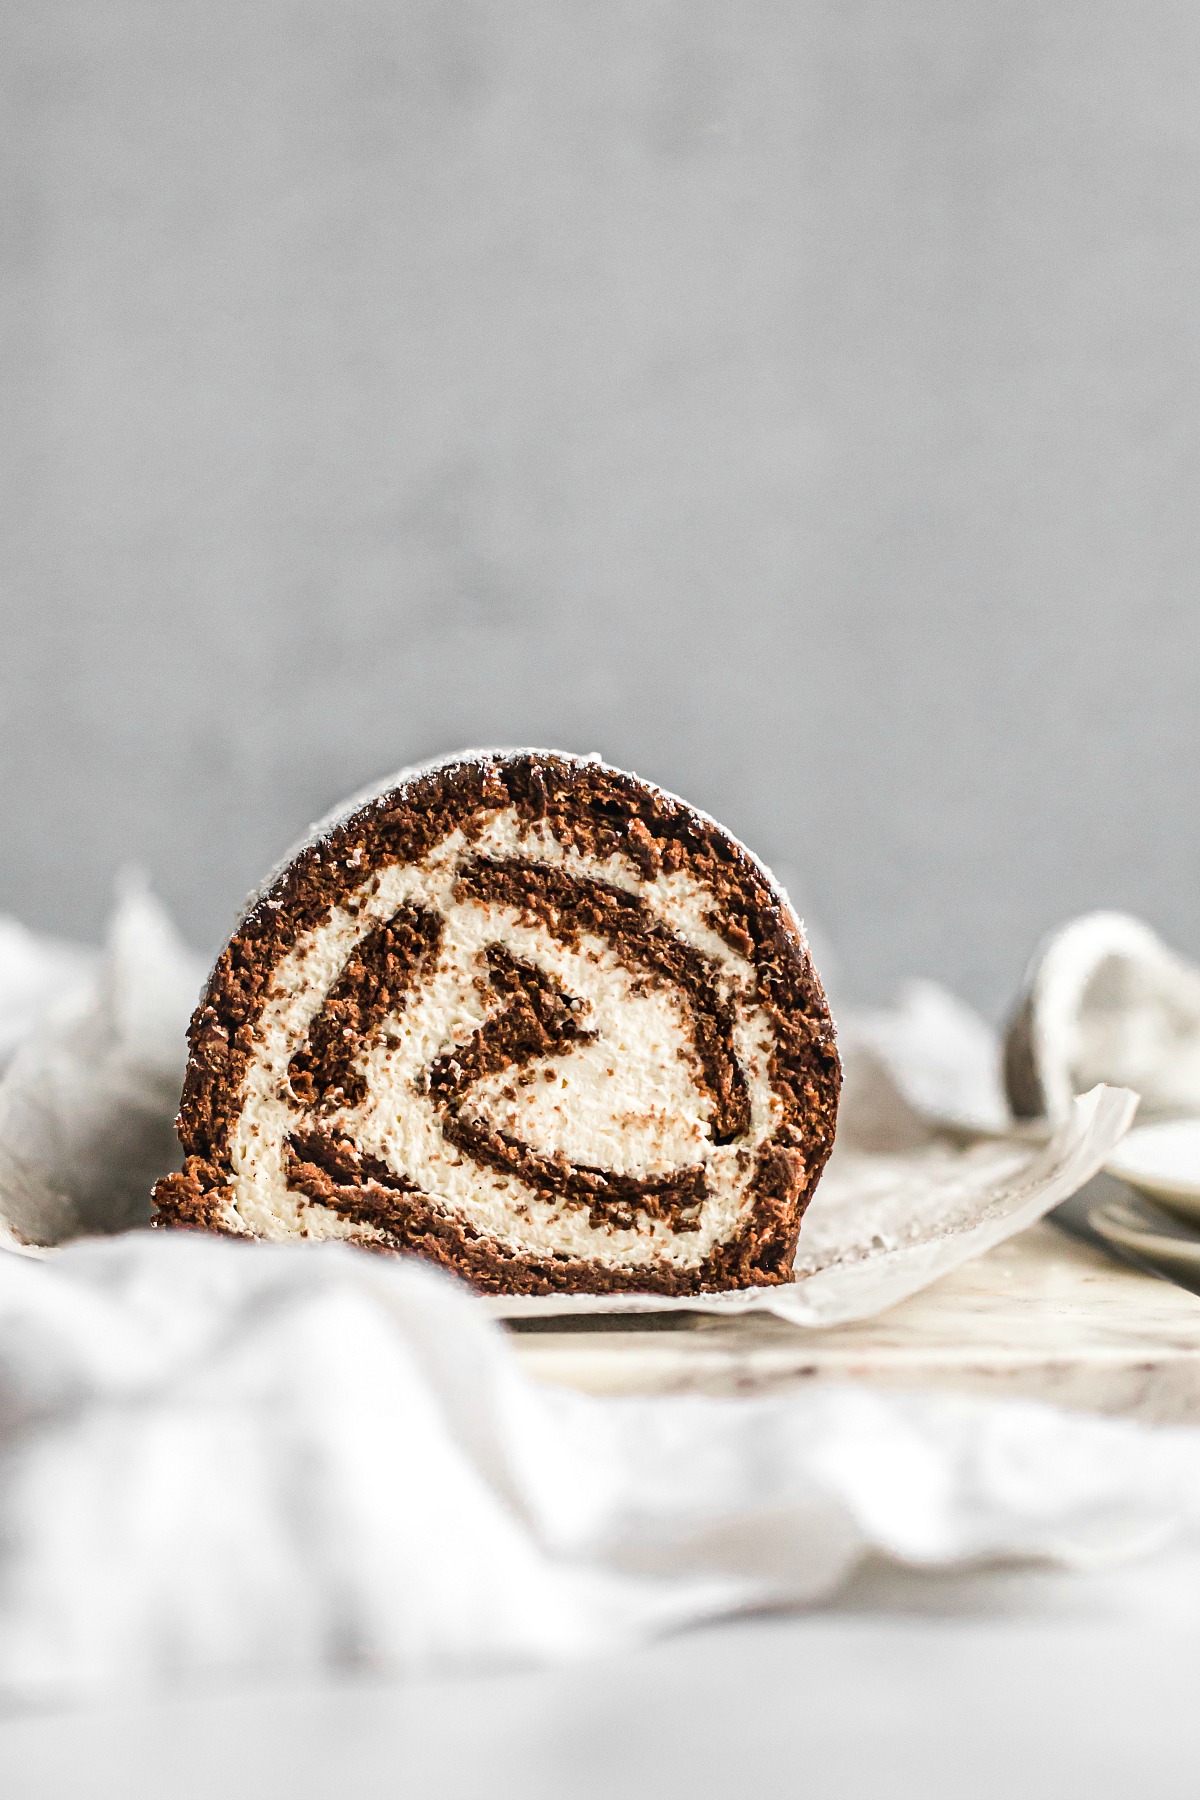 Easy Chocolate Yule Log Cake Recipe - Kroger